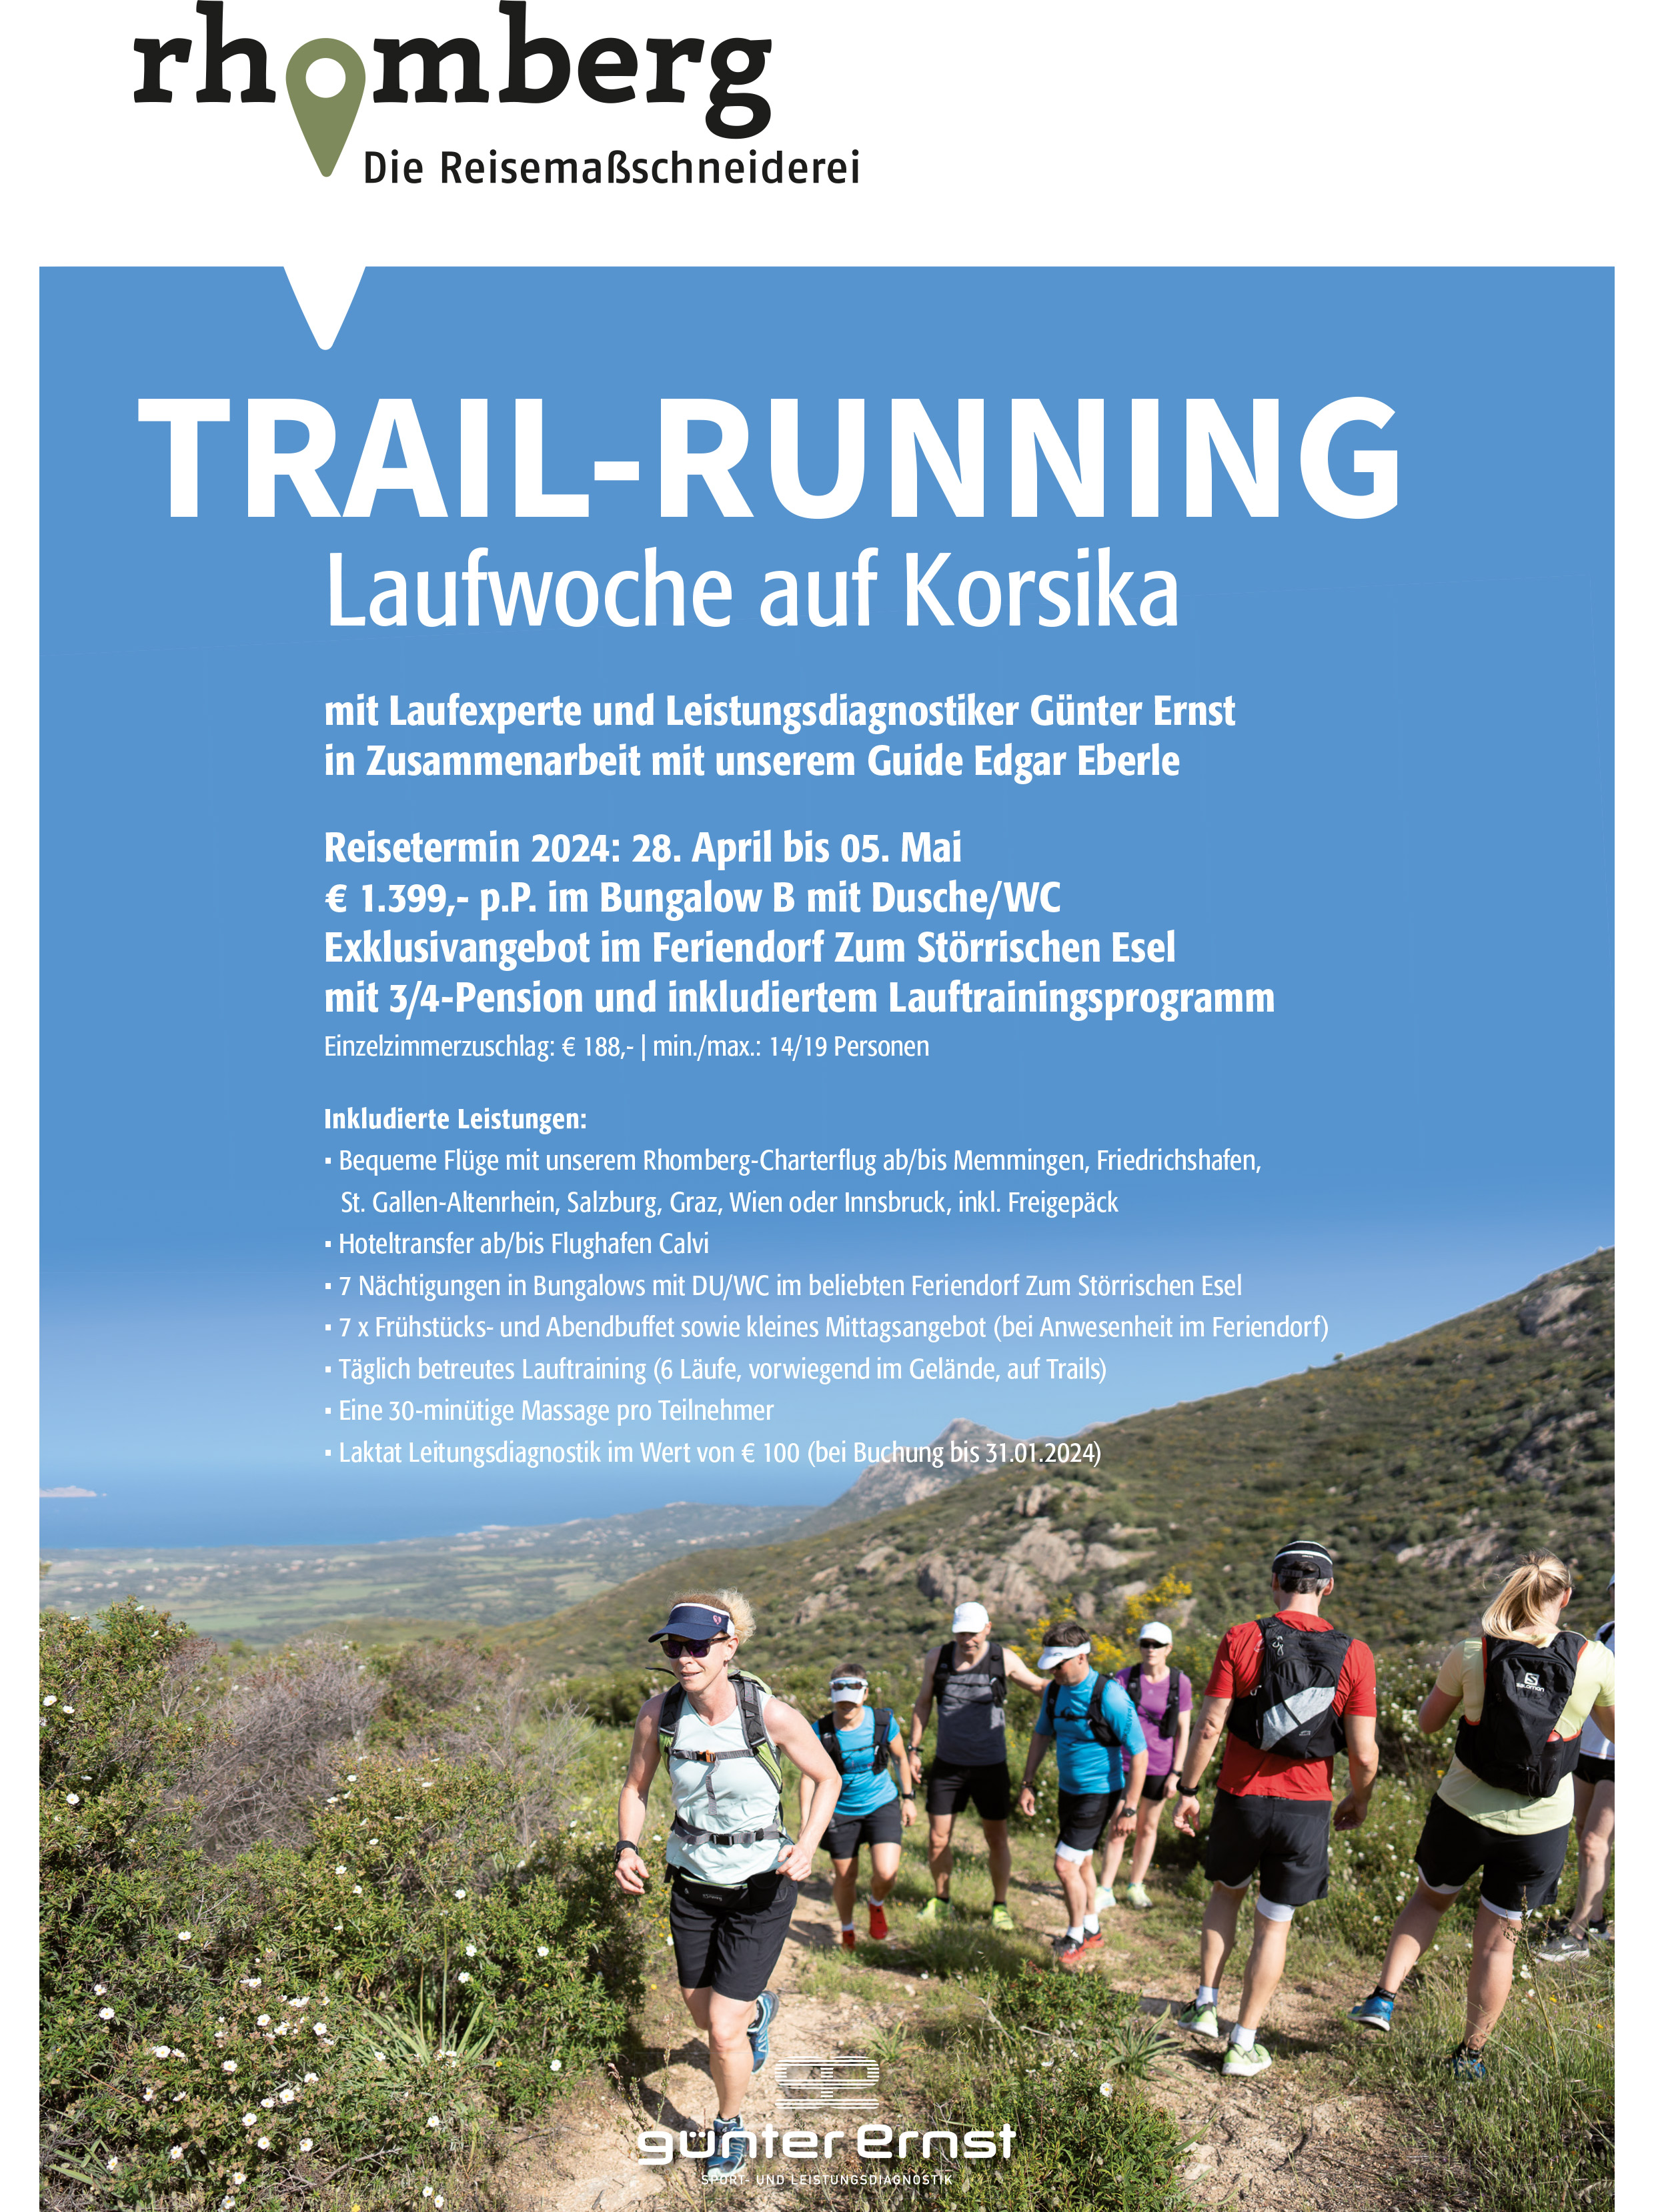 Trail Running auf Korsika